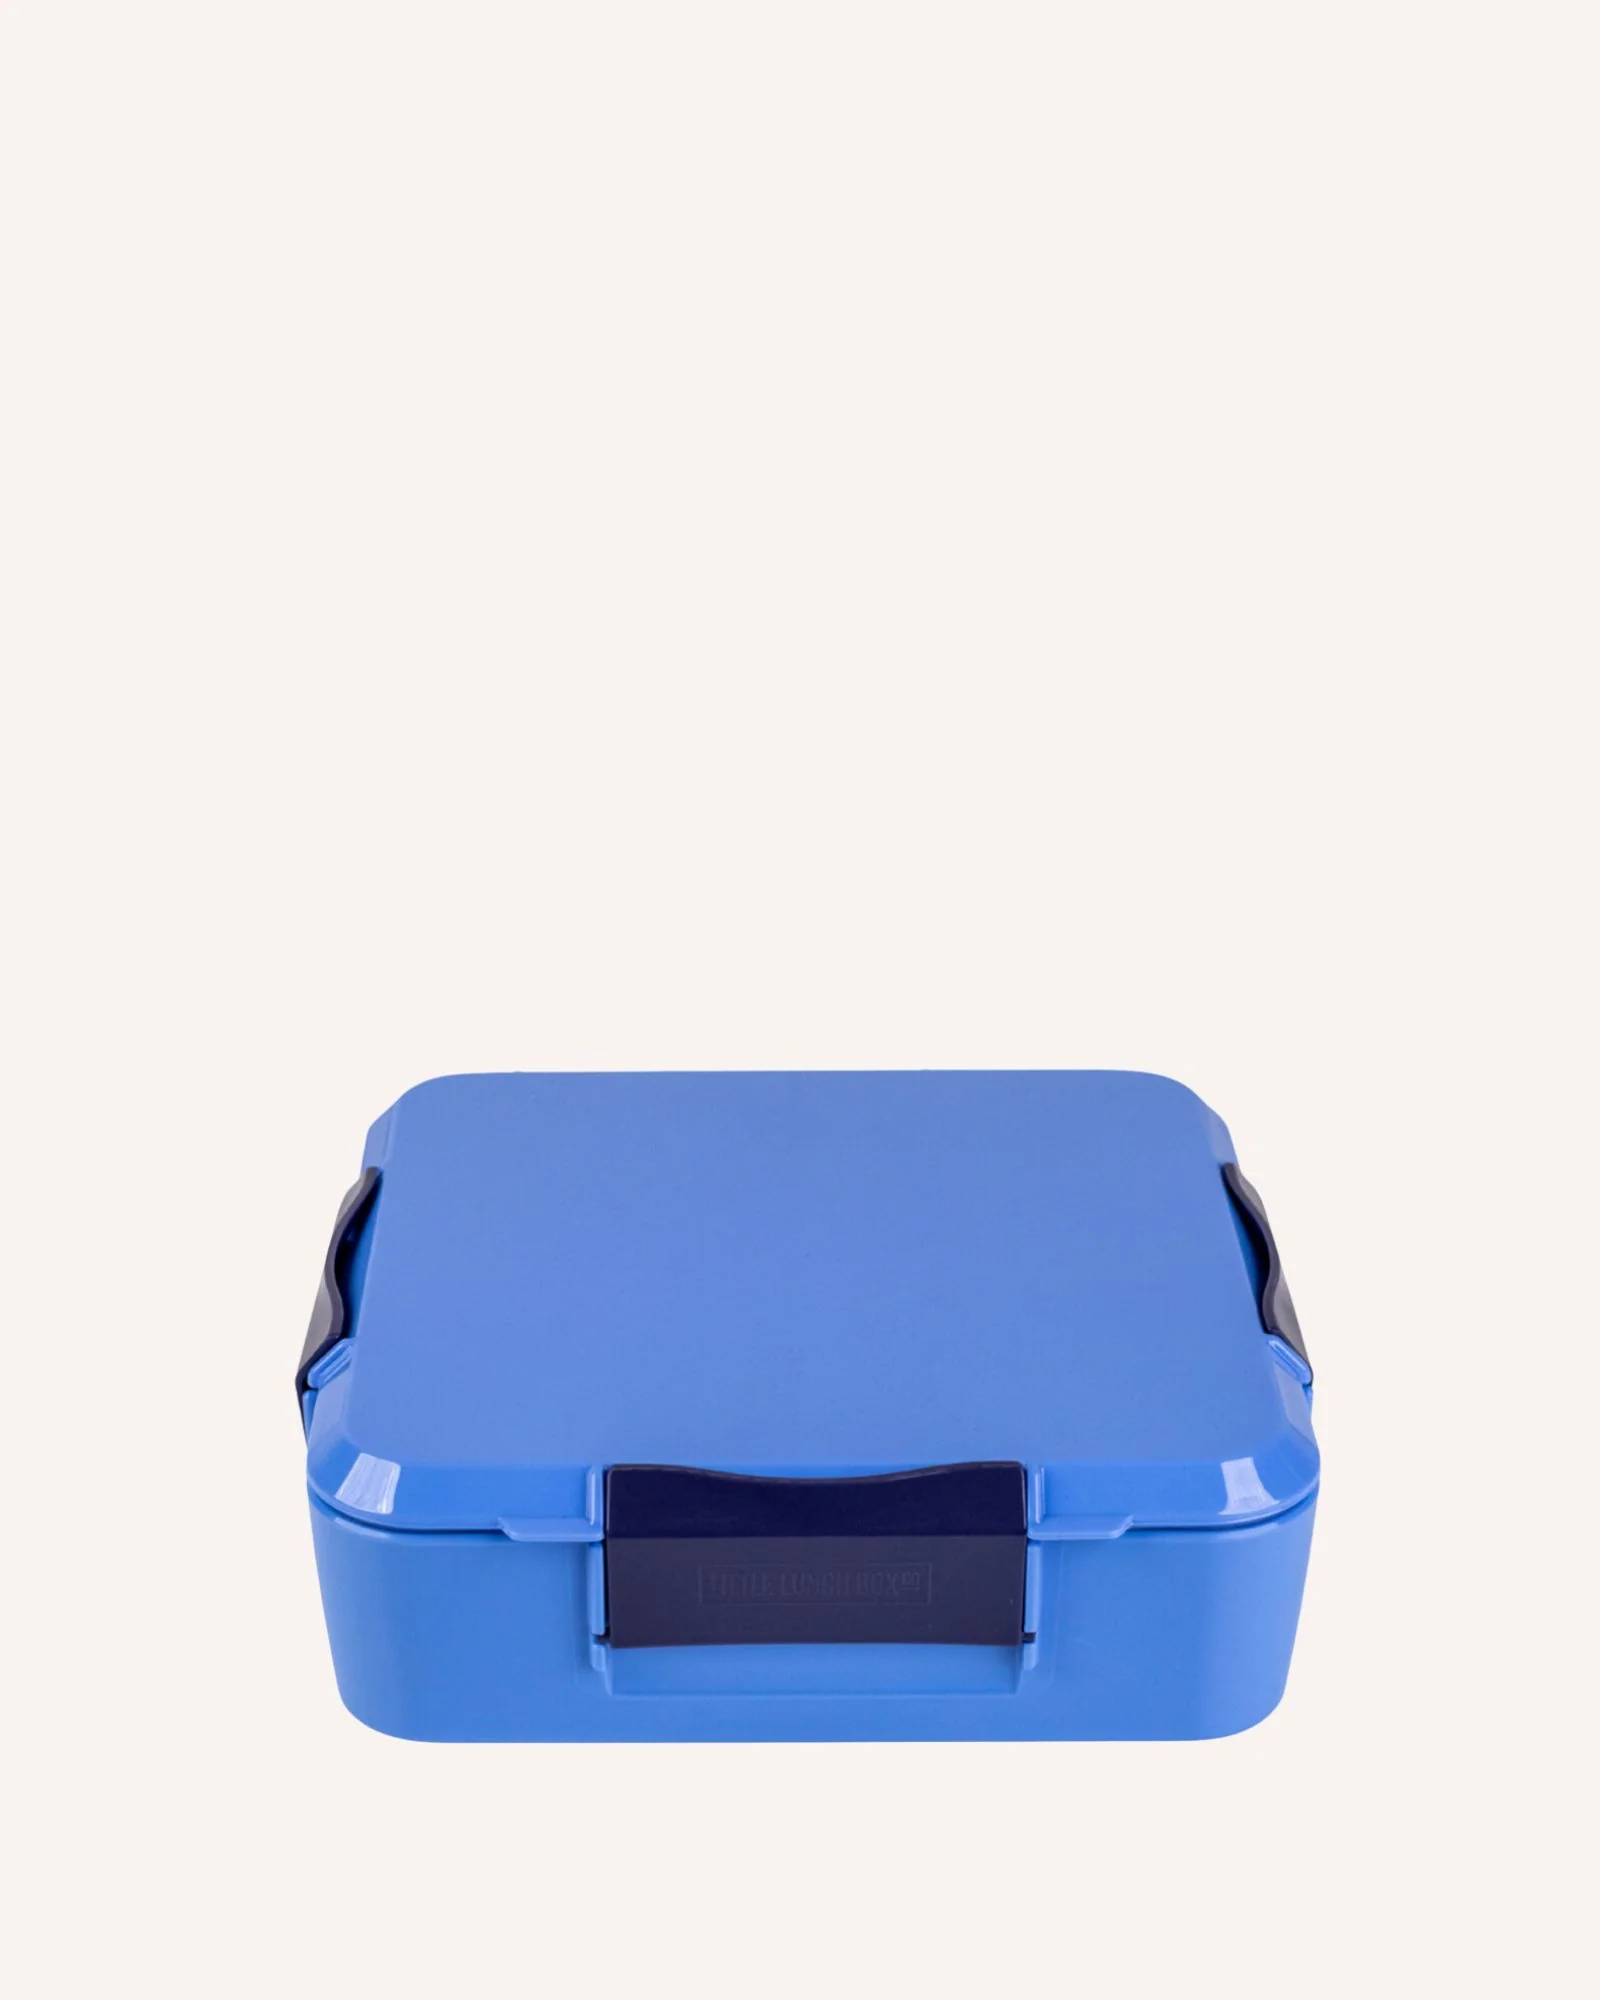 Little Lunch Box Co – Bento Plus - Blueberry